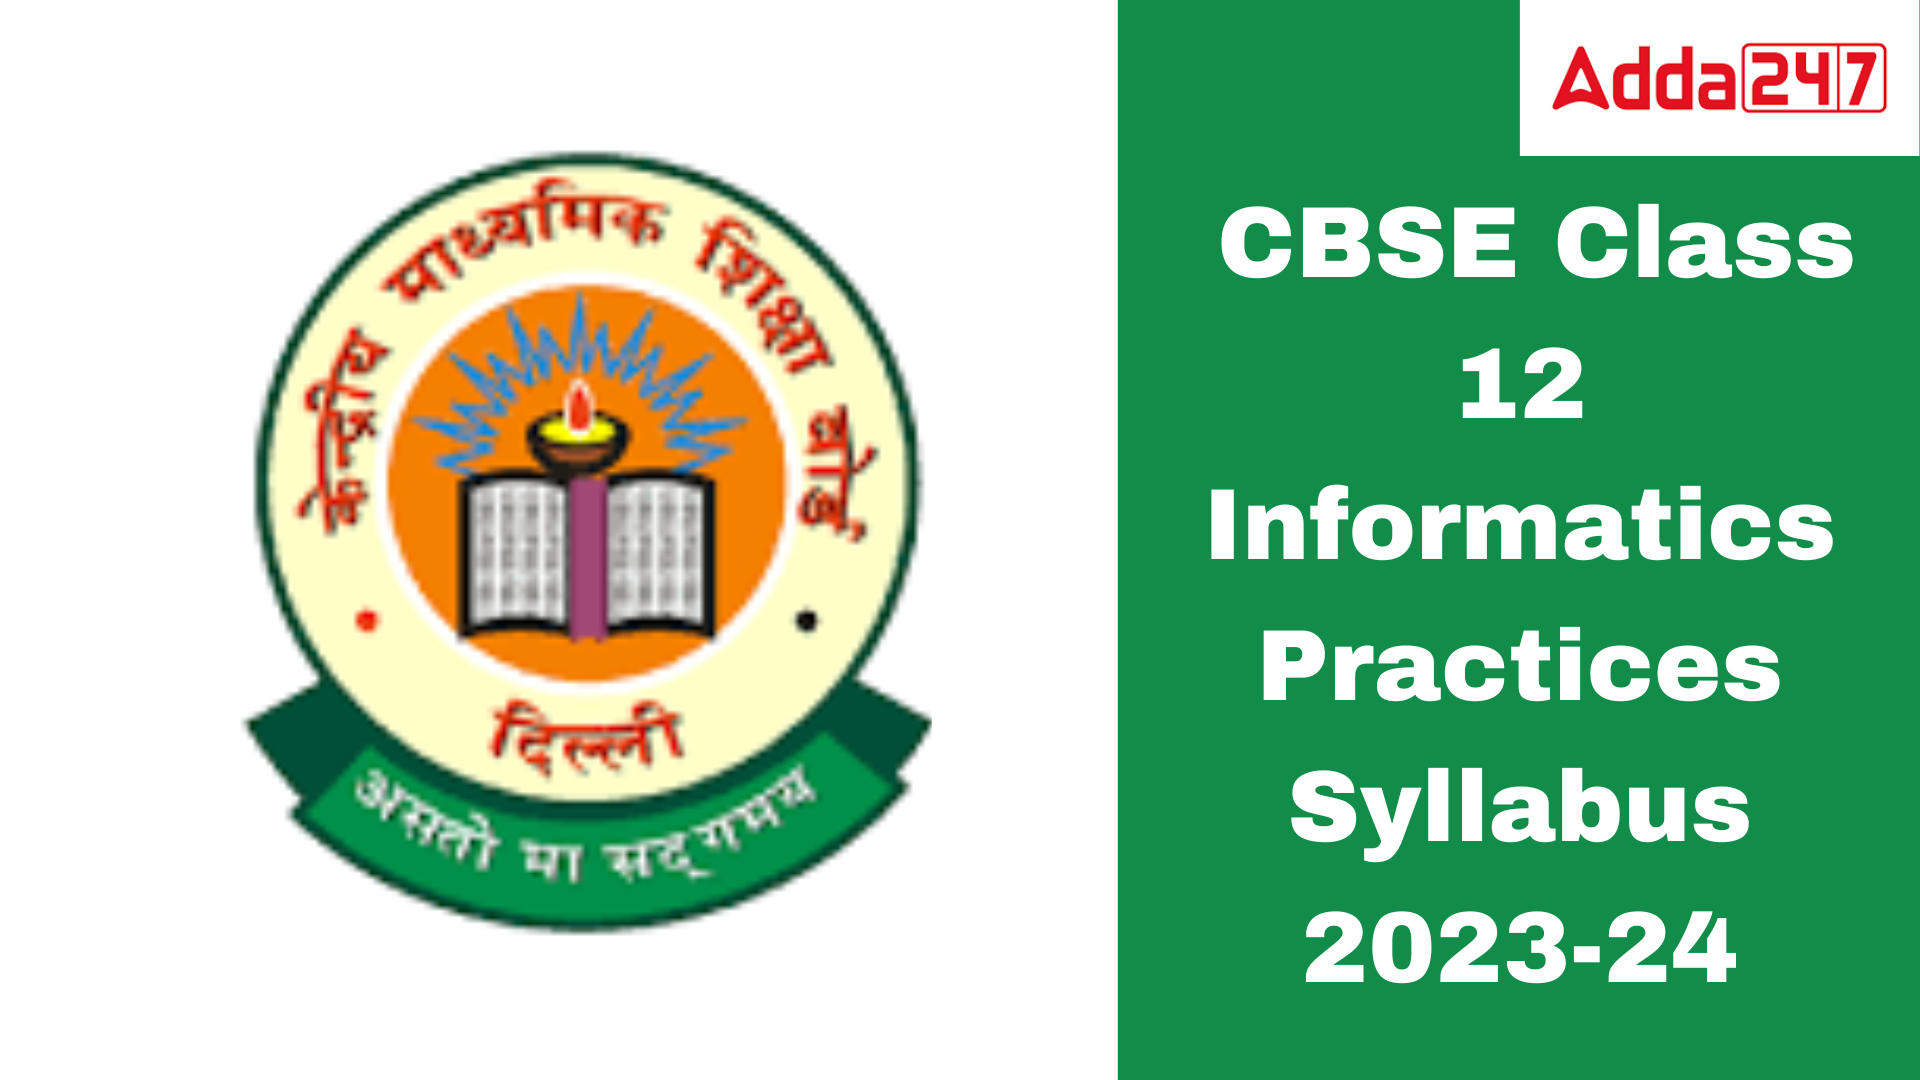 CBSE Class 12 Informatics Practices Syllabus 2023-24